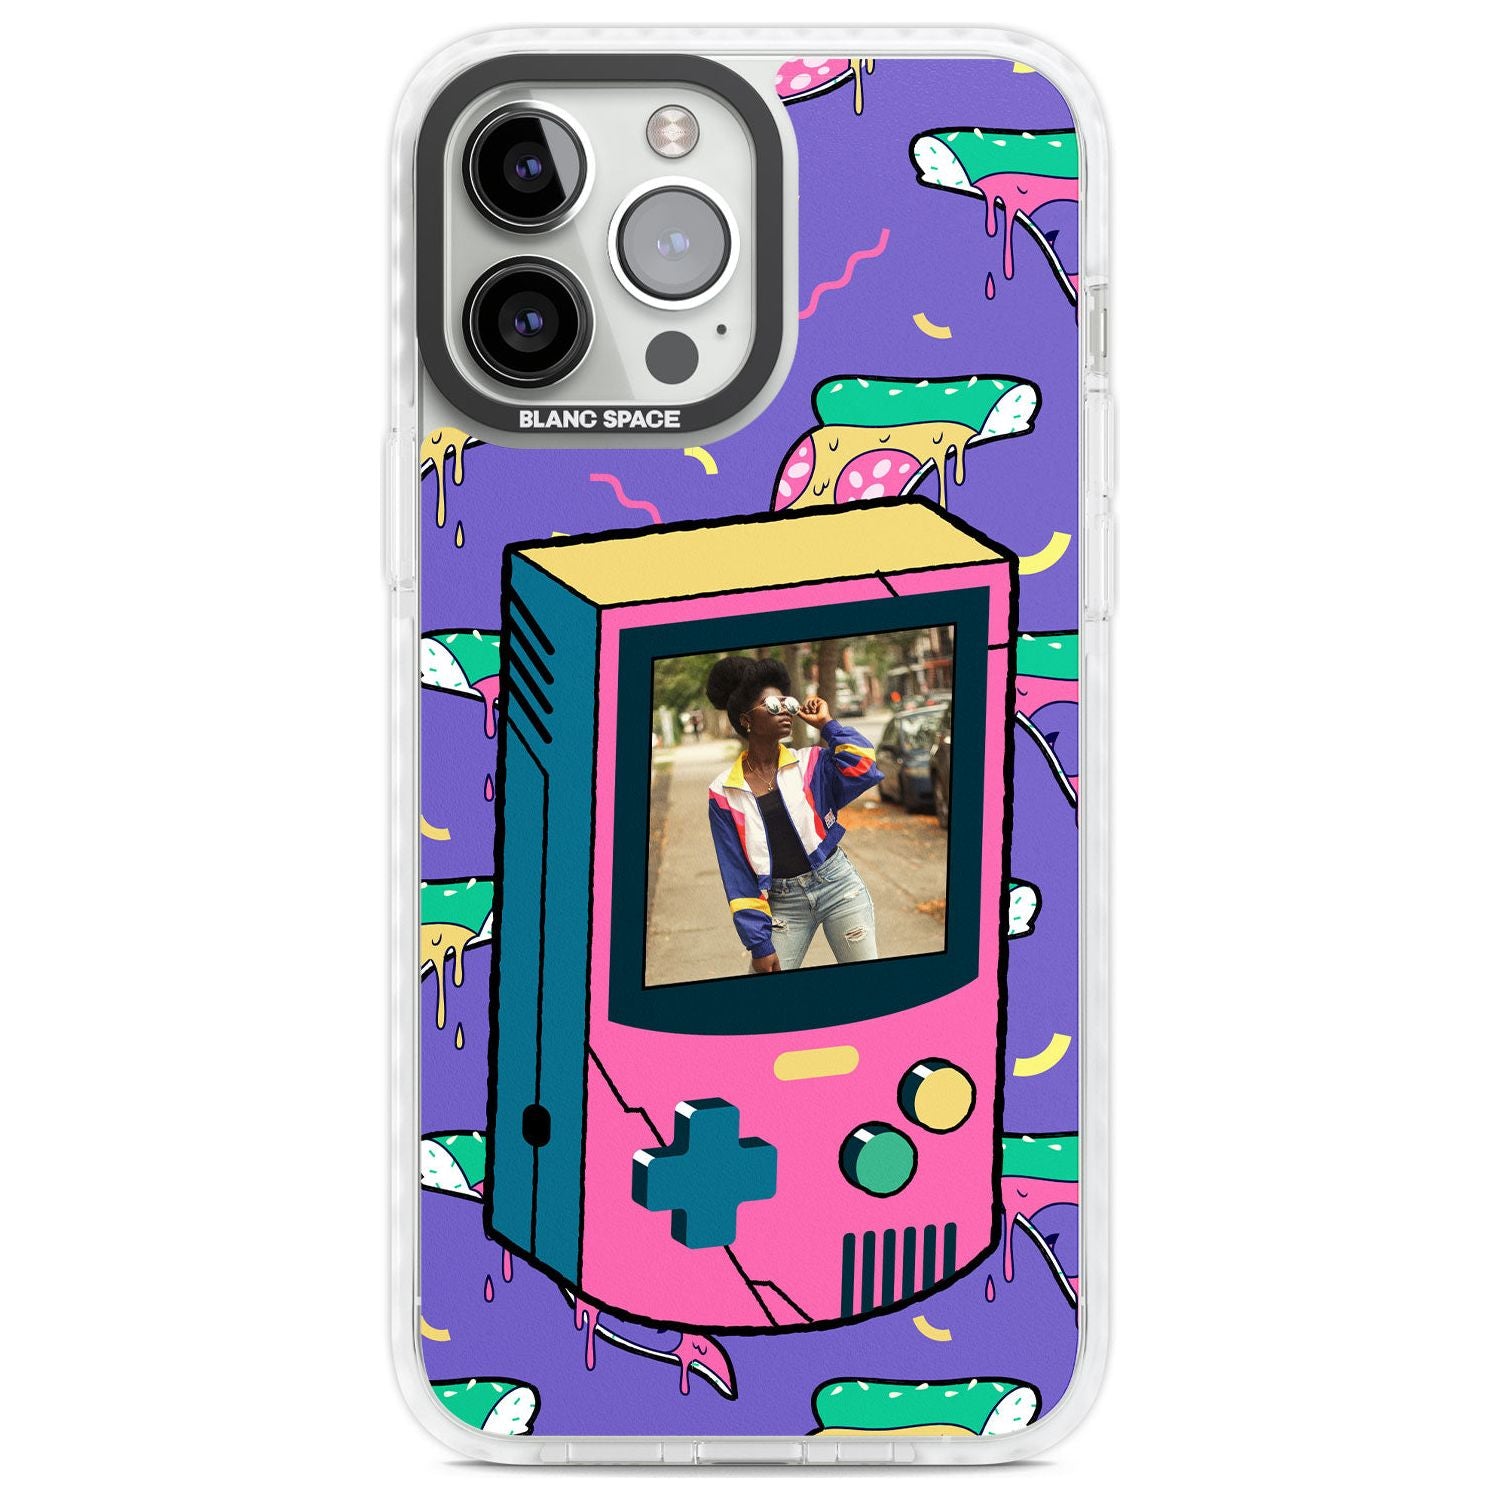 Personalised Retro Game Photo Case Custom Phone Case iPhone 13 Pro Max / Impact Case,iPhone 14 Pro Max / Impact Case Blanc Space